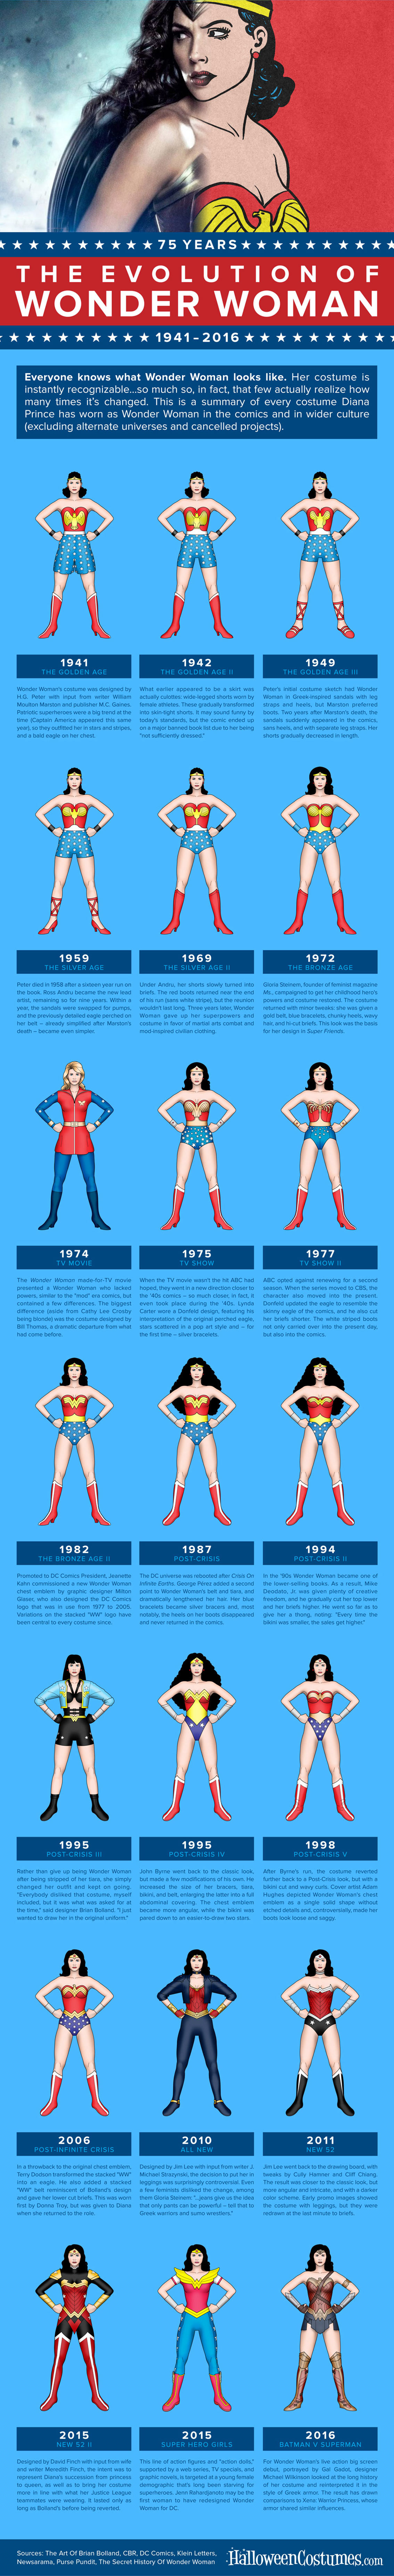 Evolution of Wonder Woman Costume - Movie Infographic